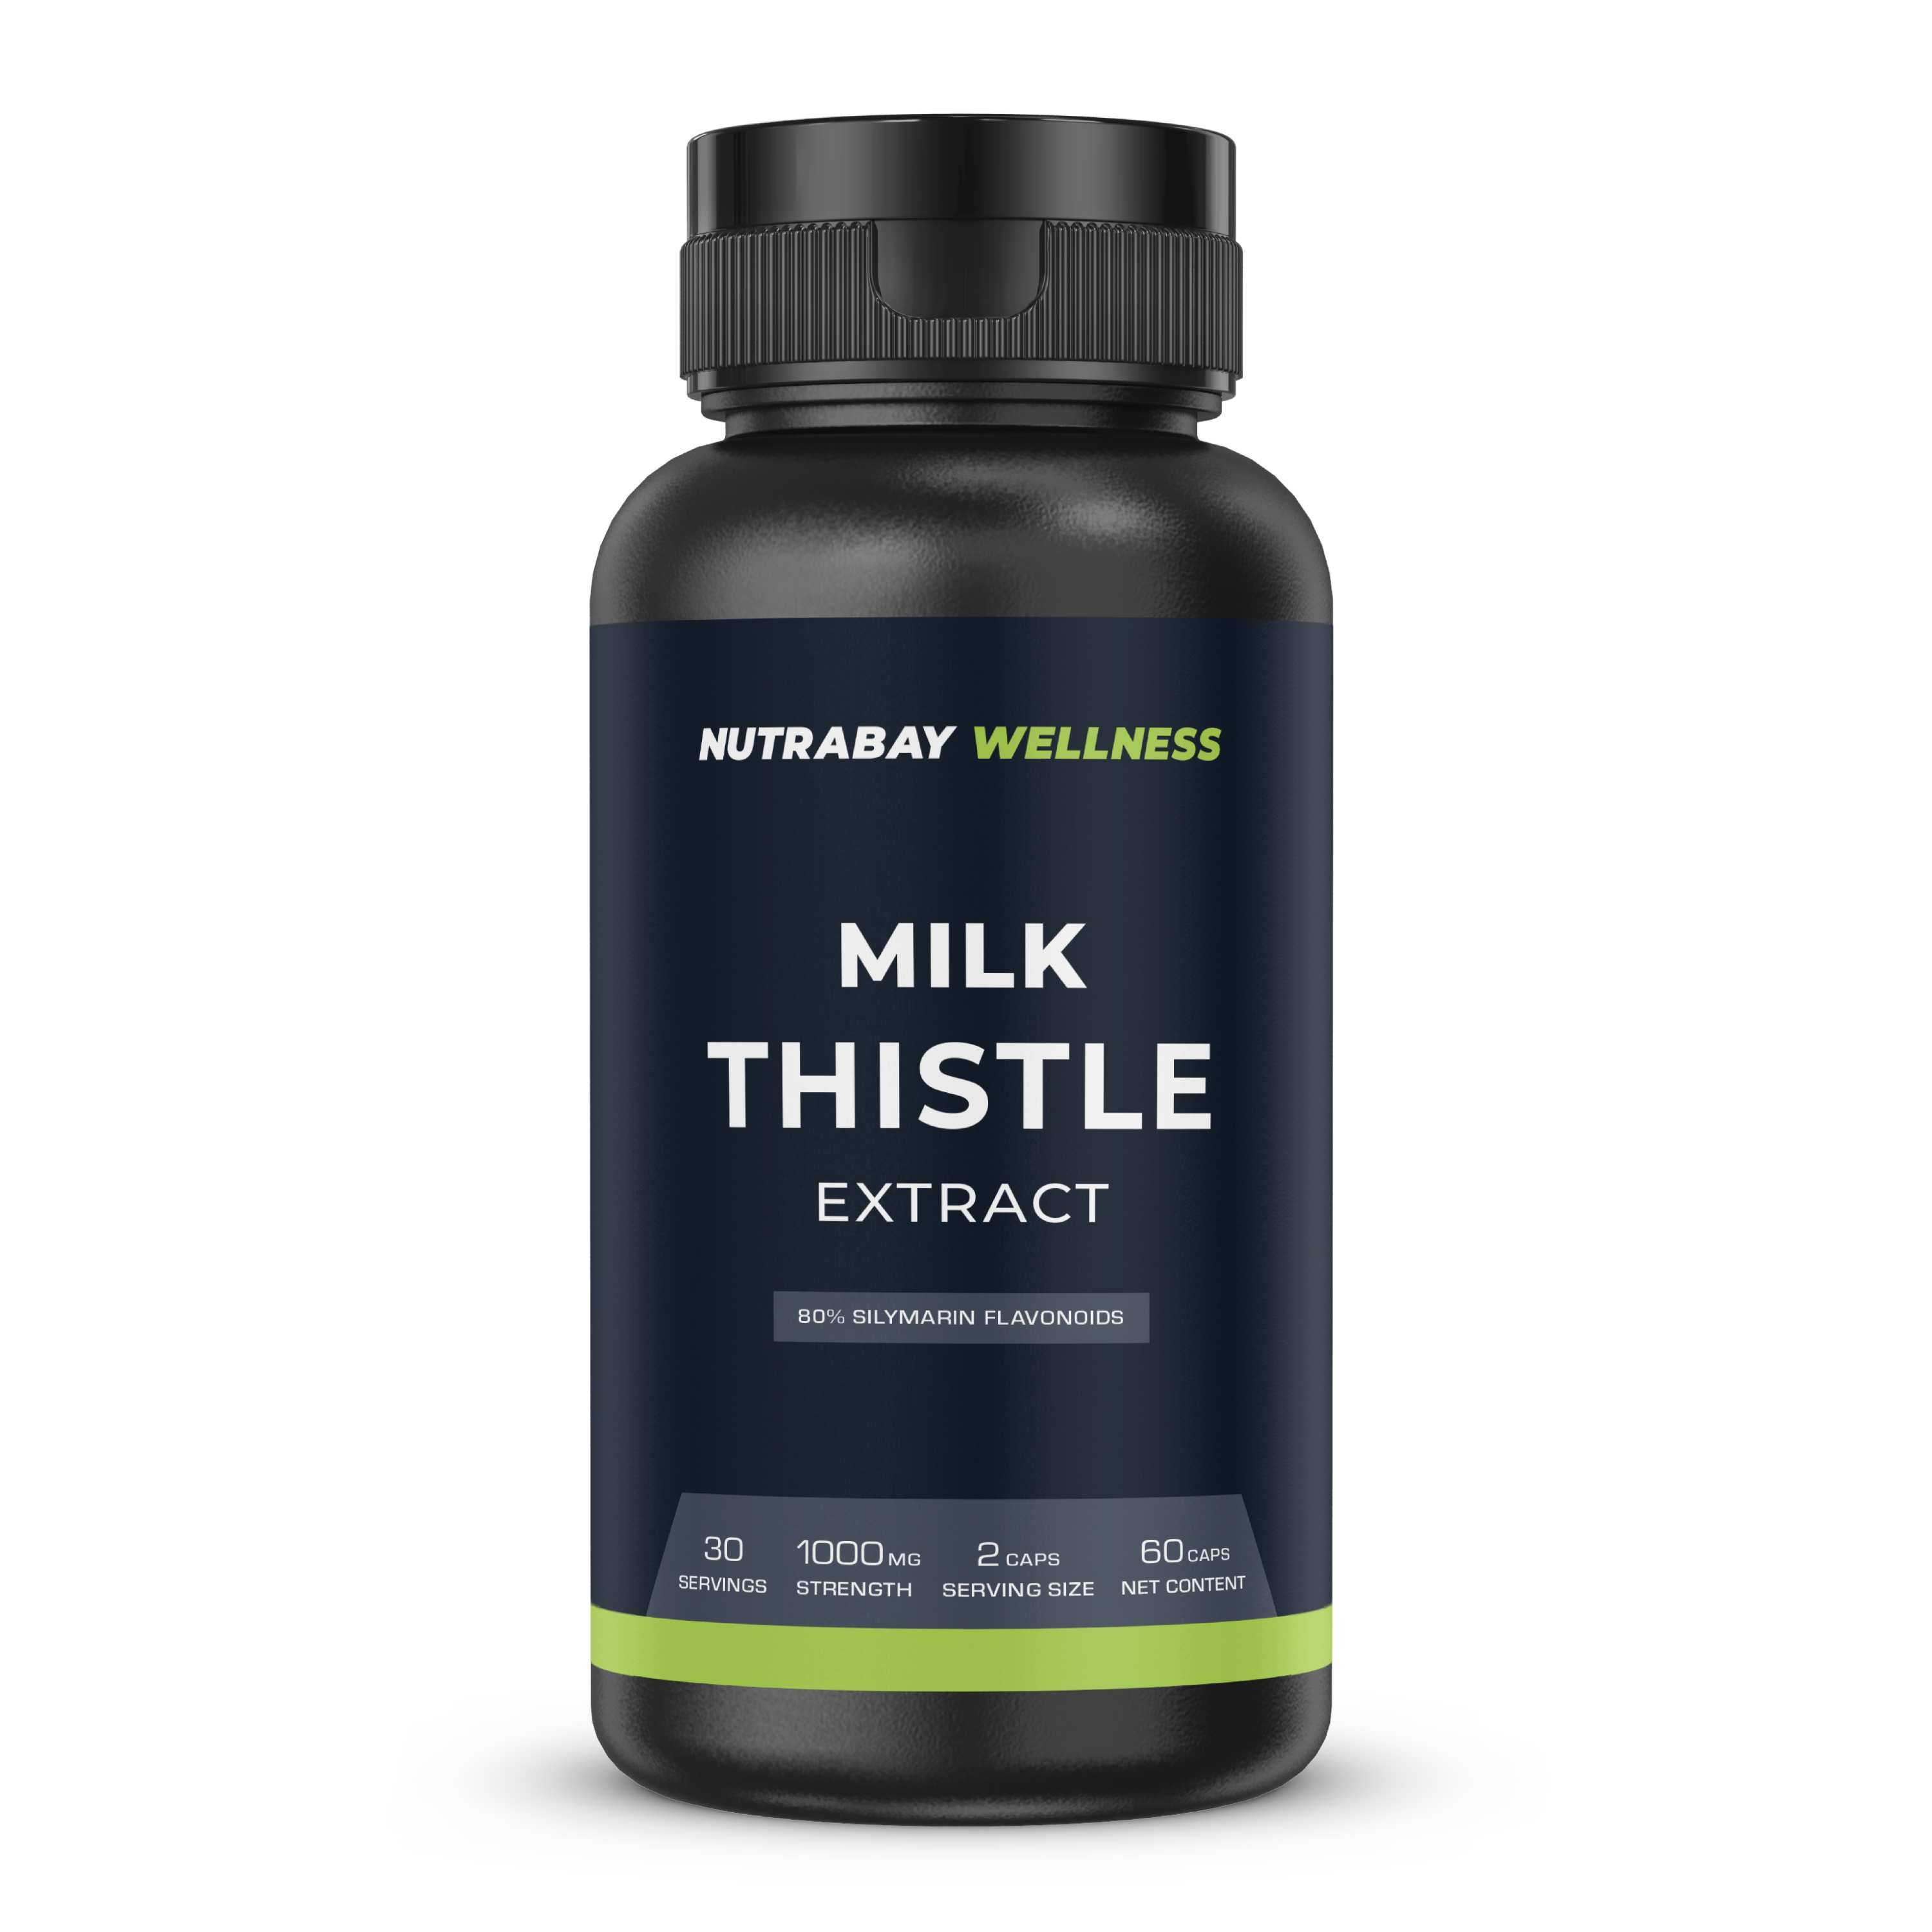 Nutrabay Wellness Milk Thistle Extract Image